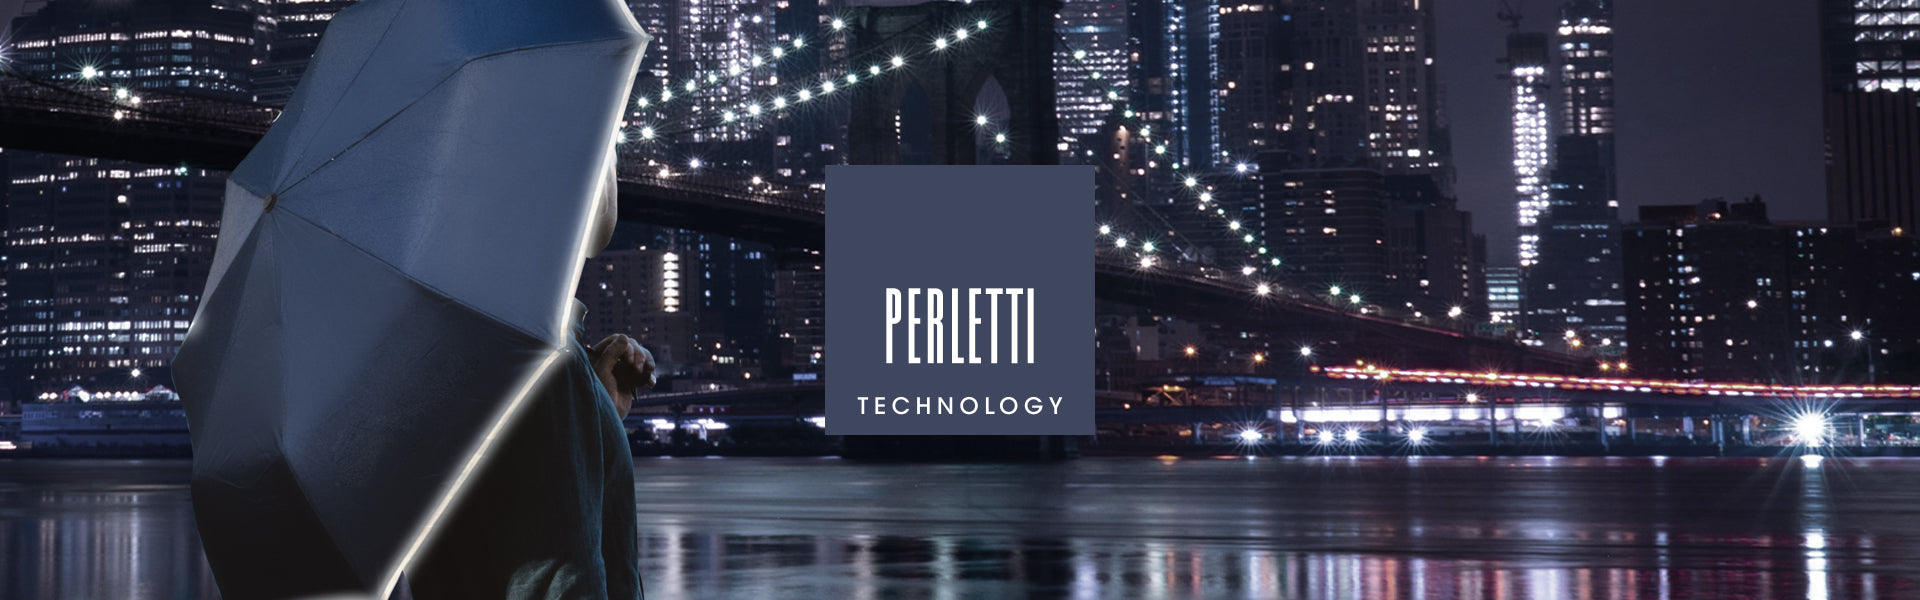 Perletti Technology